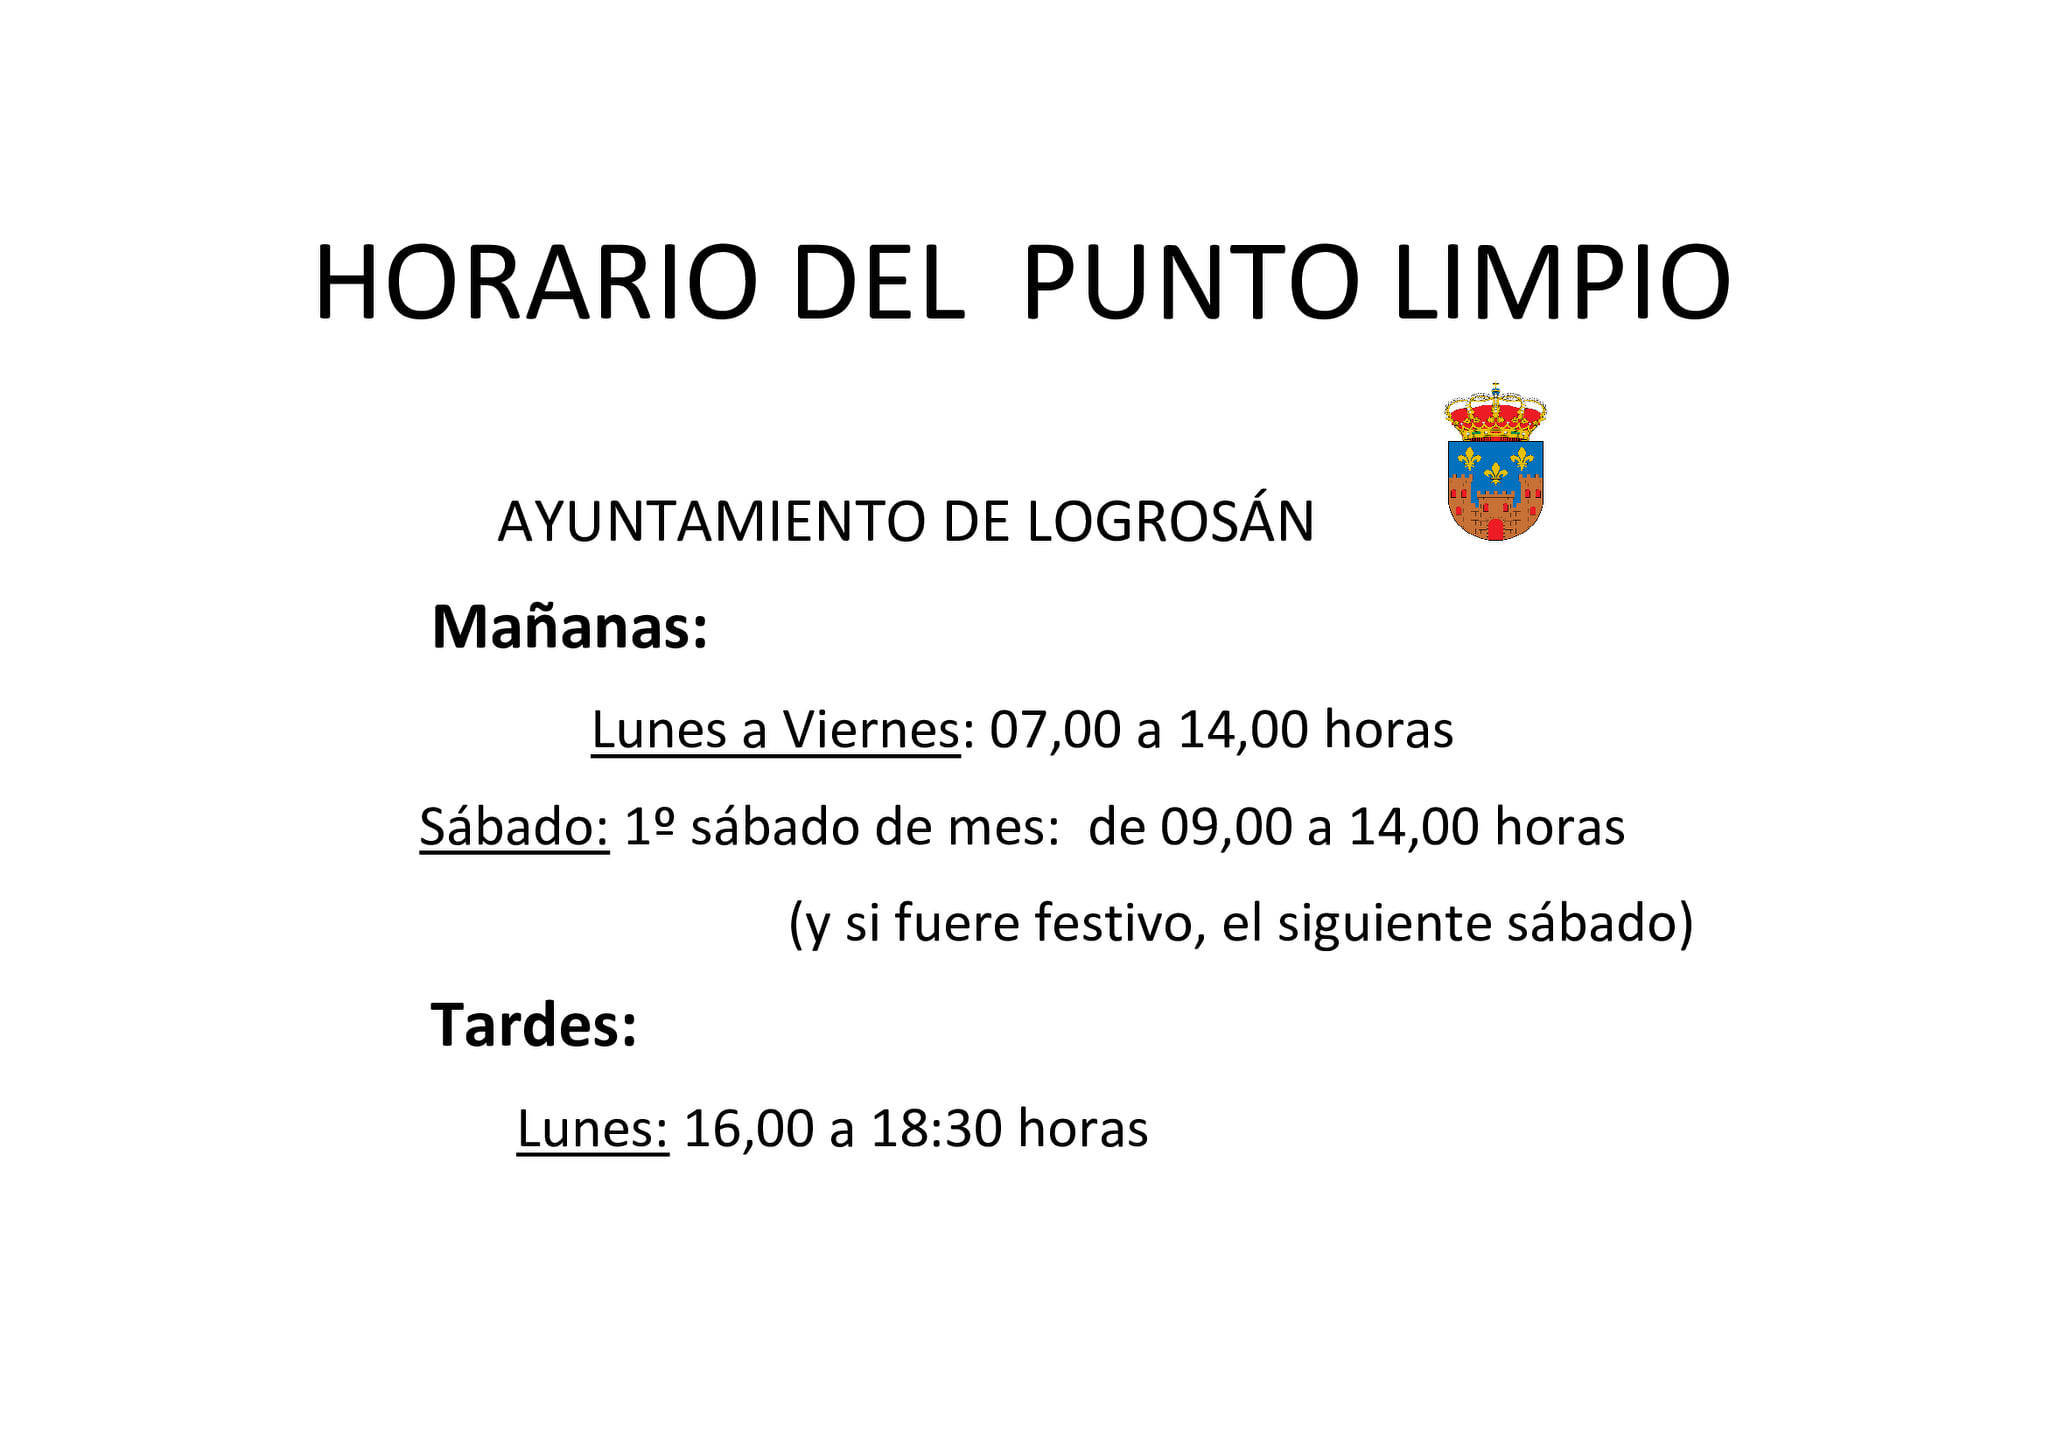 Horario del punto limpio (noviembre 2021) - Logrosán (Cáceres)